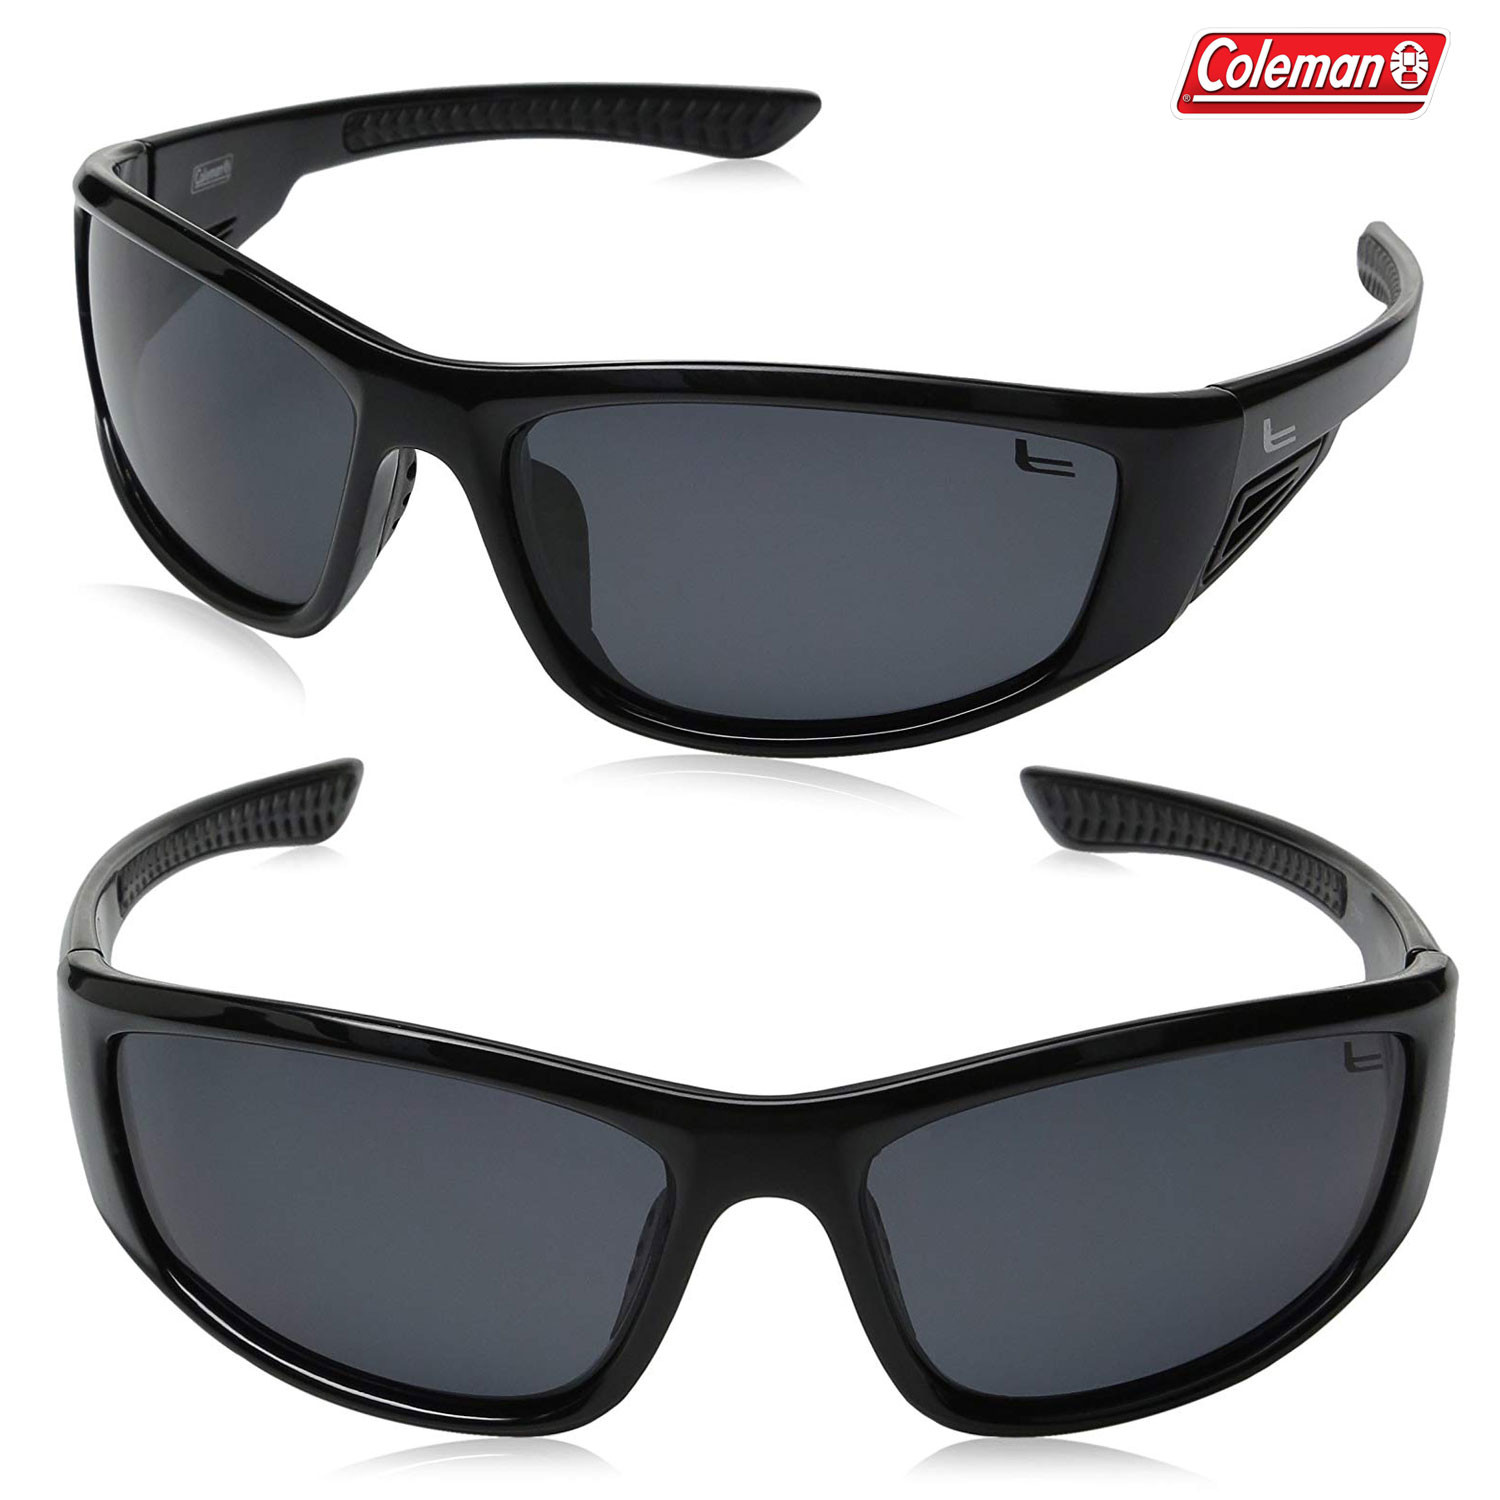 Coleman Highlander Polarized Sunglasses | Field Supply